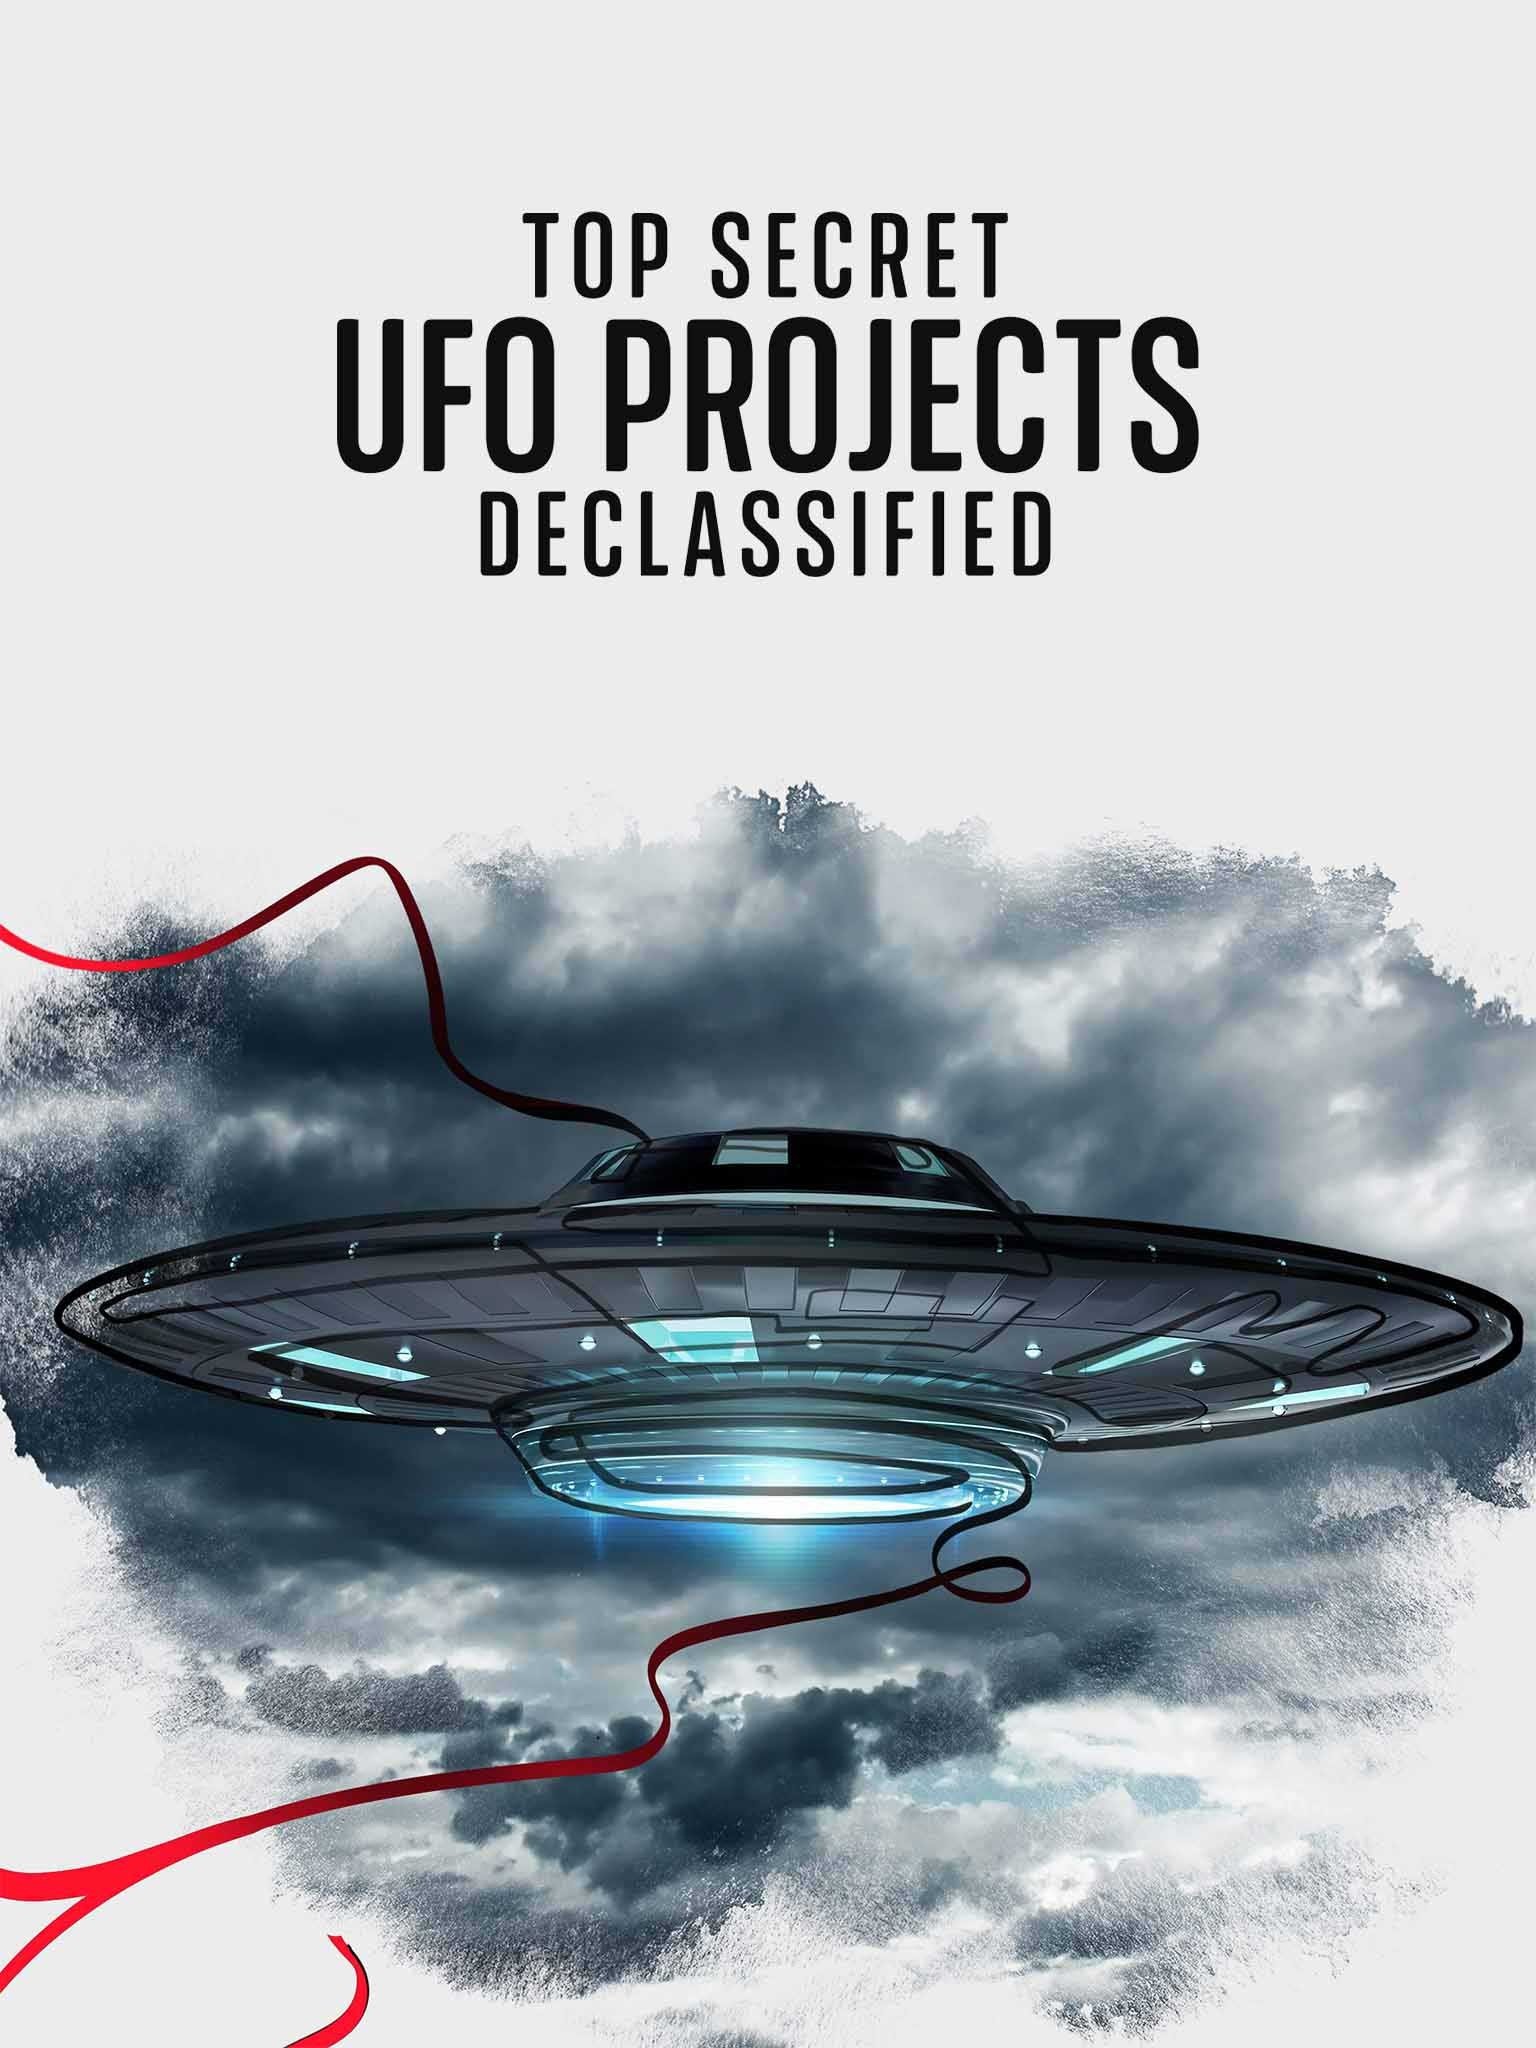 Dự án UFO tuyệt mật: Hé lộ bí ẩn-Top Secret Ufo Projects: Declassified